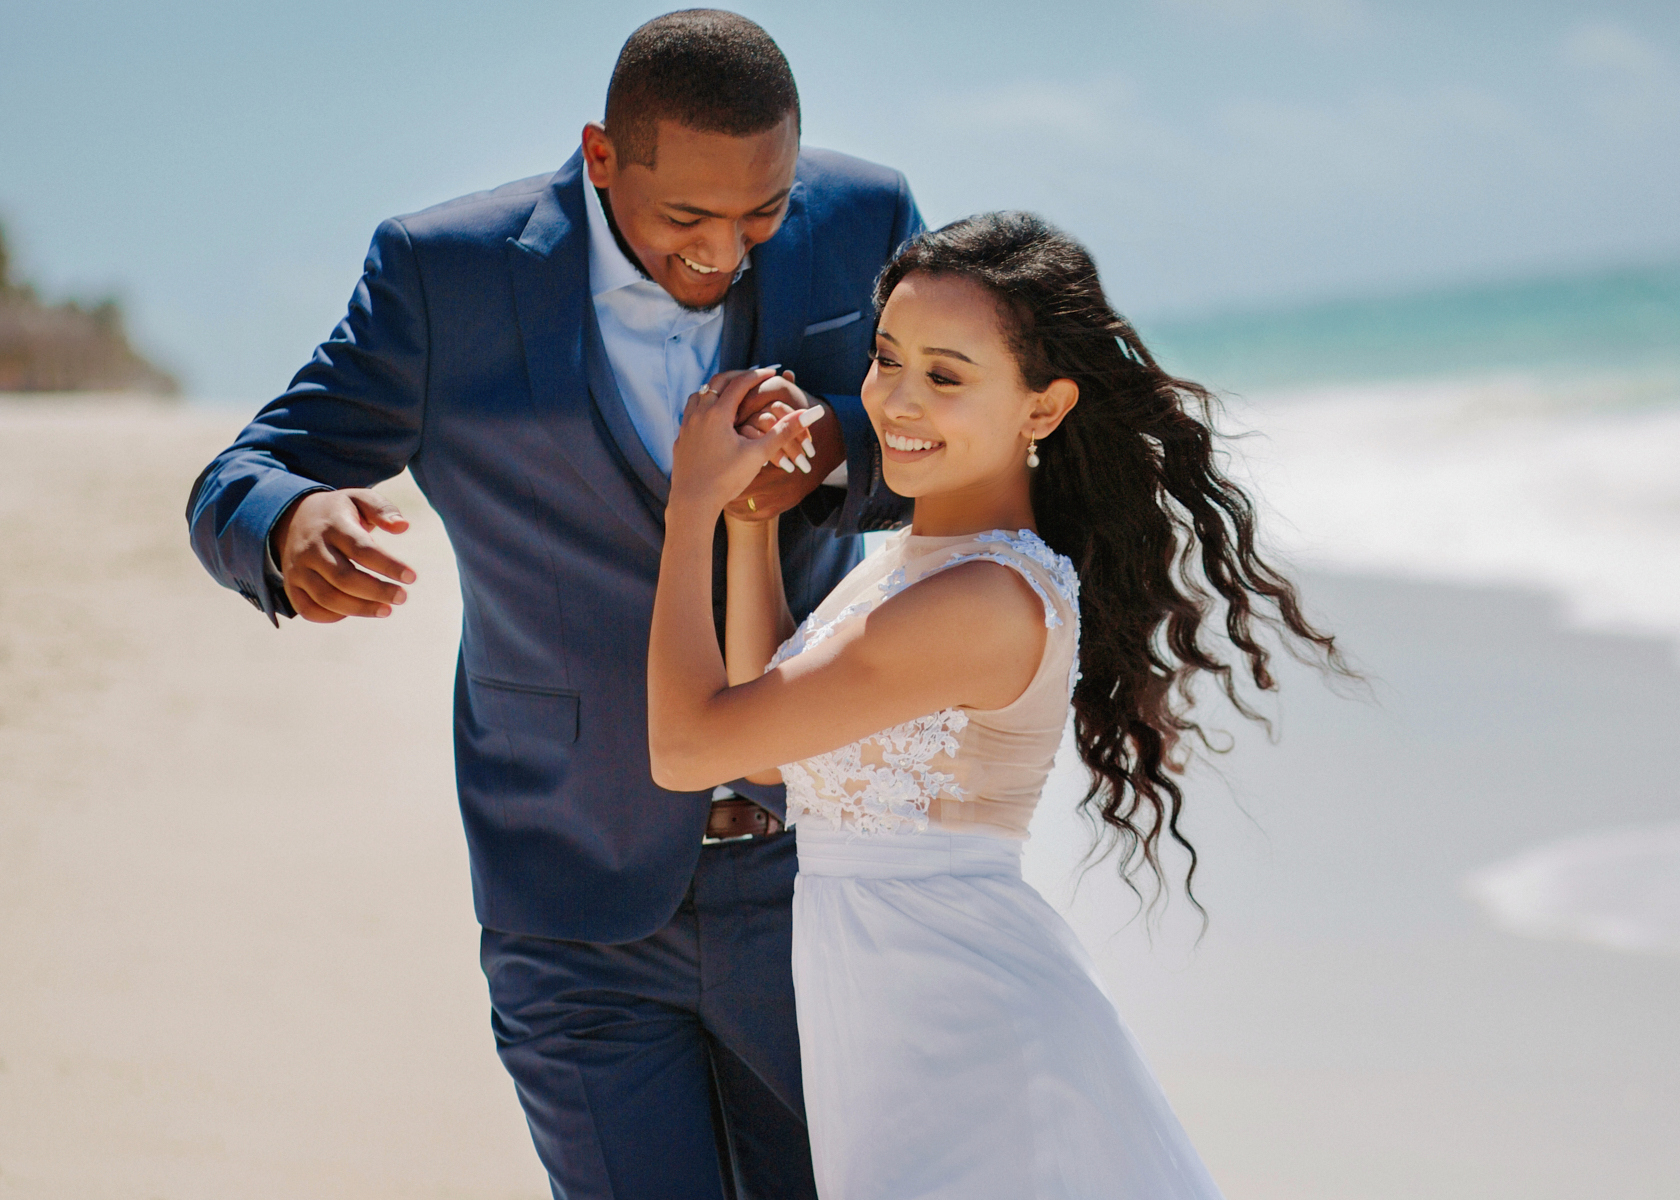 Newlywed Honeymoon Photography in Kenya - Leopard Beach - Kenyan After Wedding Photographer — Jafassam Photography Studio